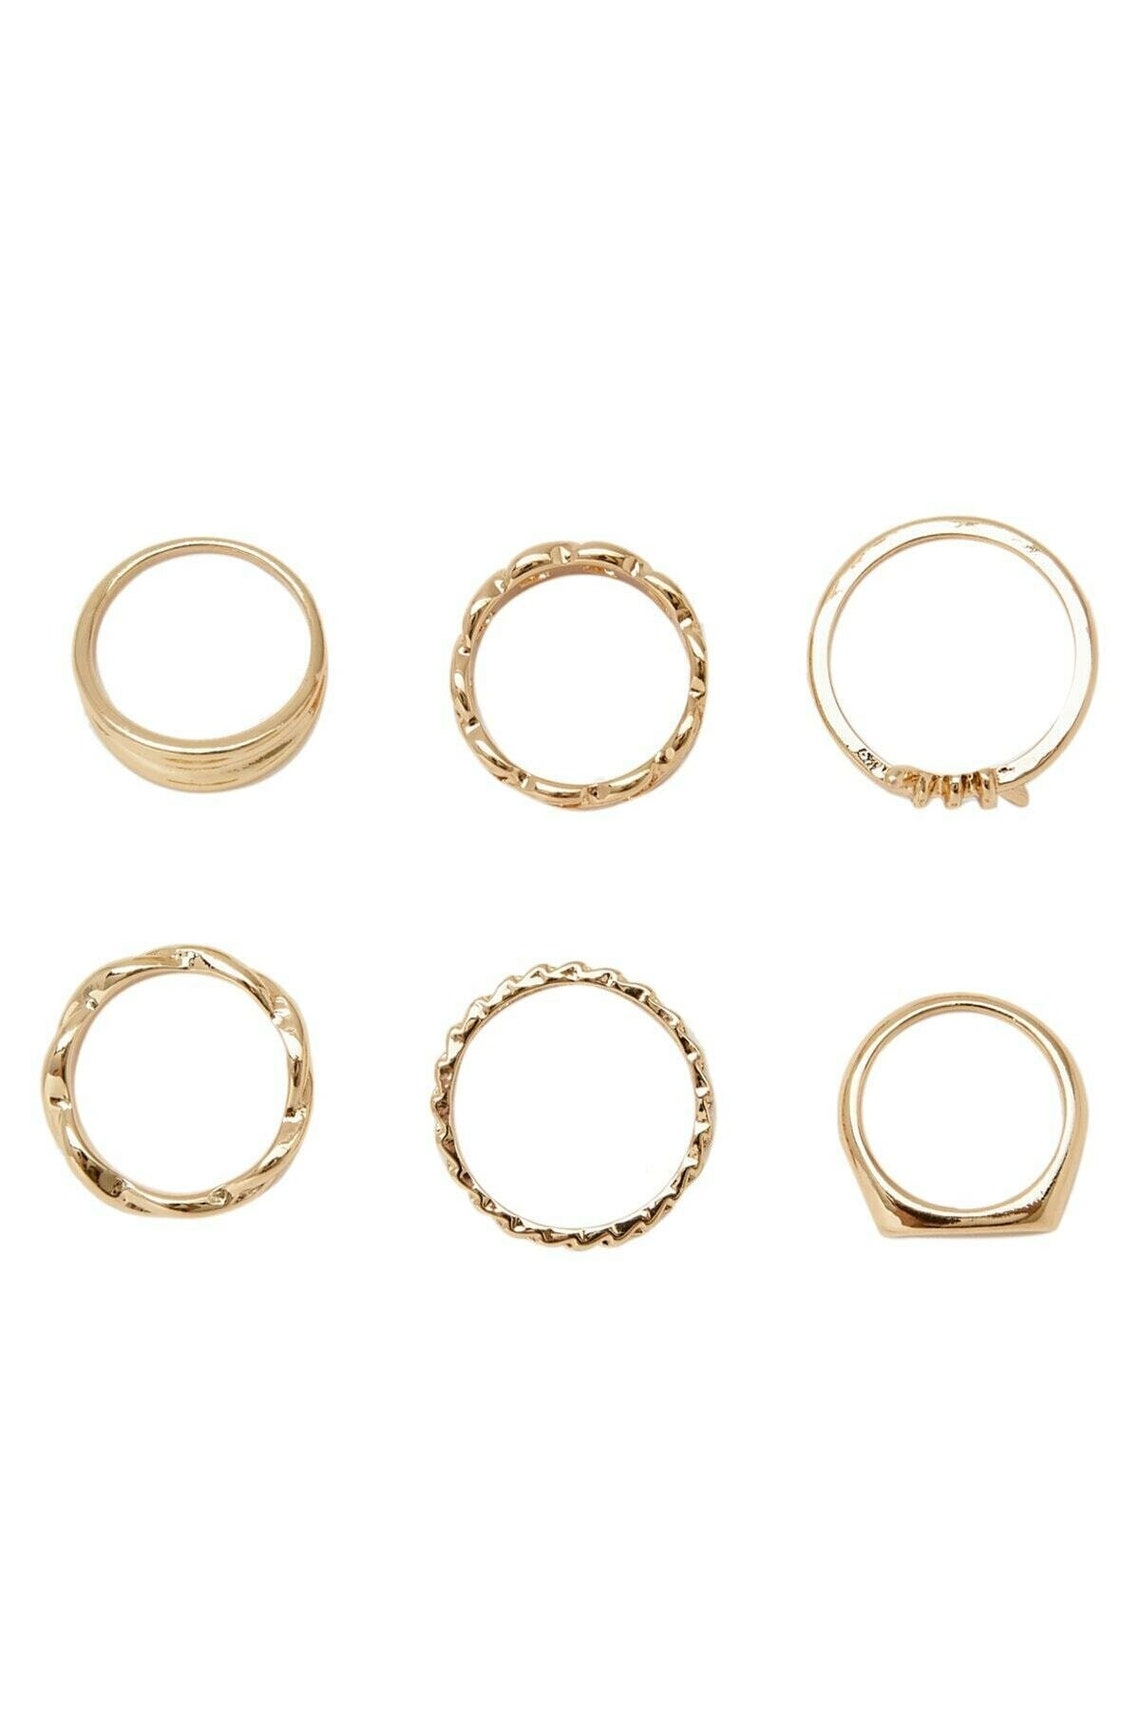 6 Piece Rings Set Gold Rings Set For Women Streetwear Ring | Etsy